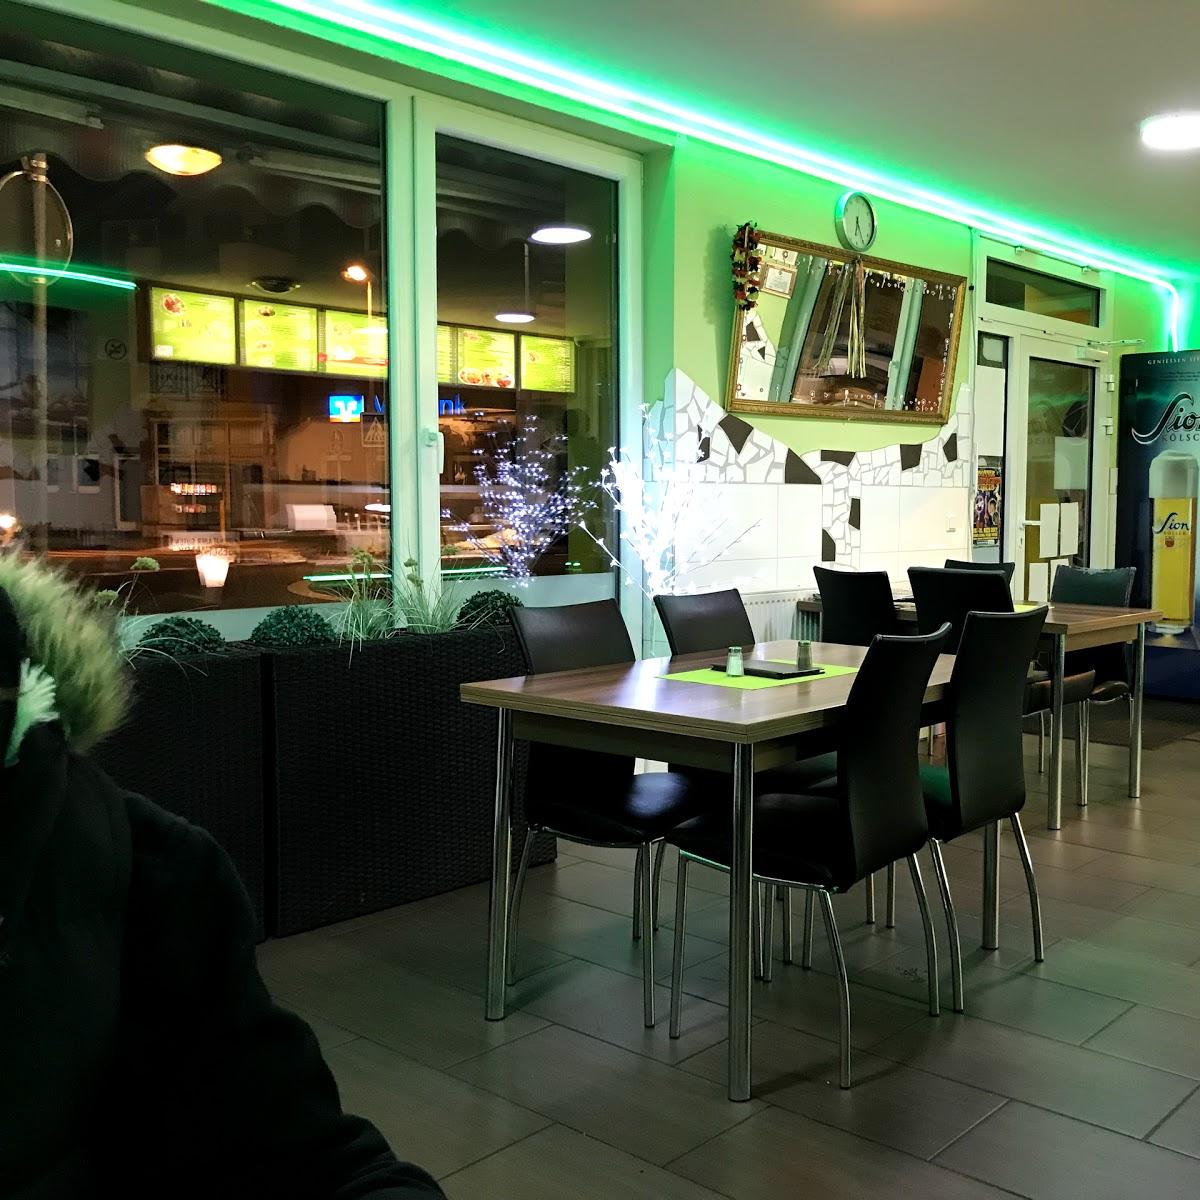 Restaurant "Genos 2 Döner Kebap Haus" in Swisttal